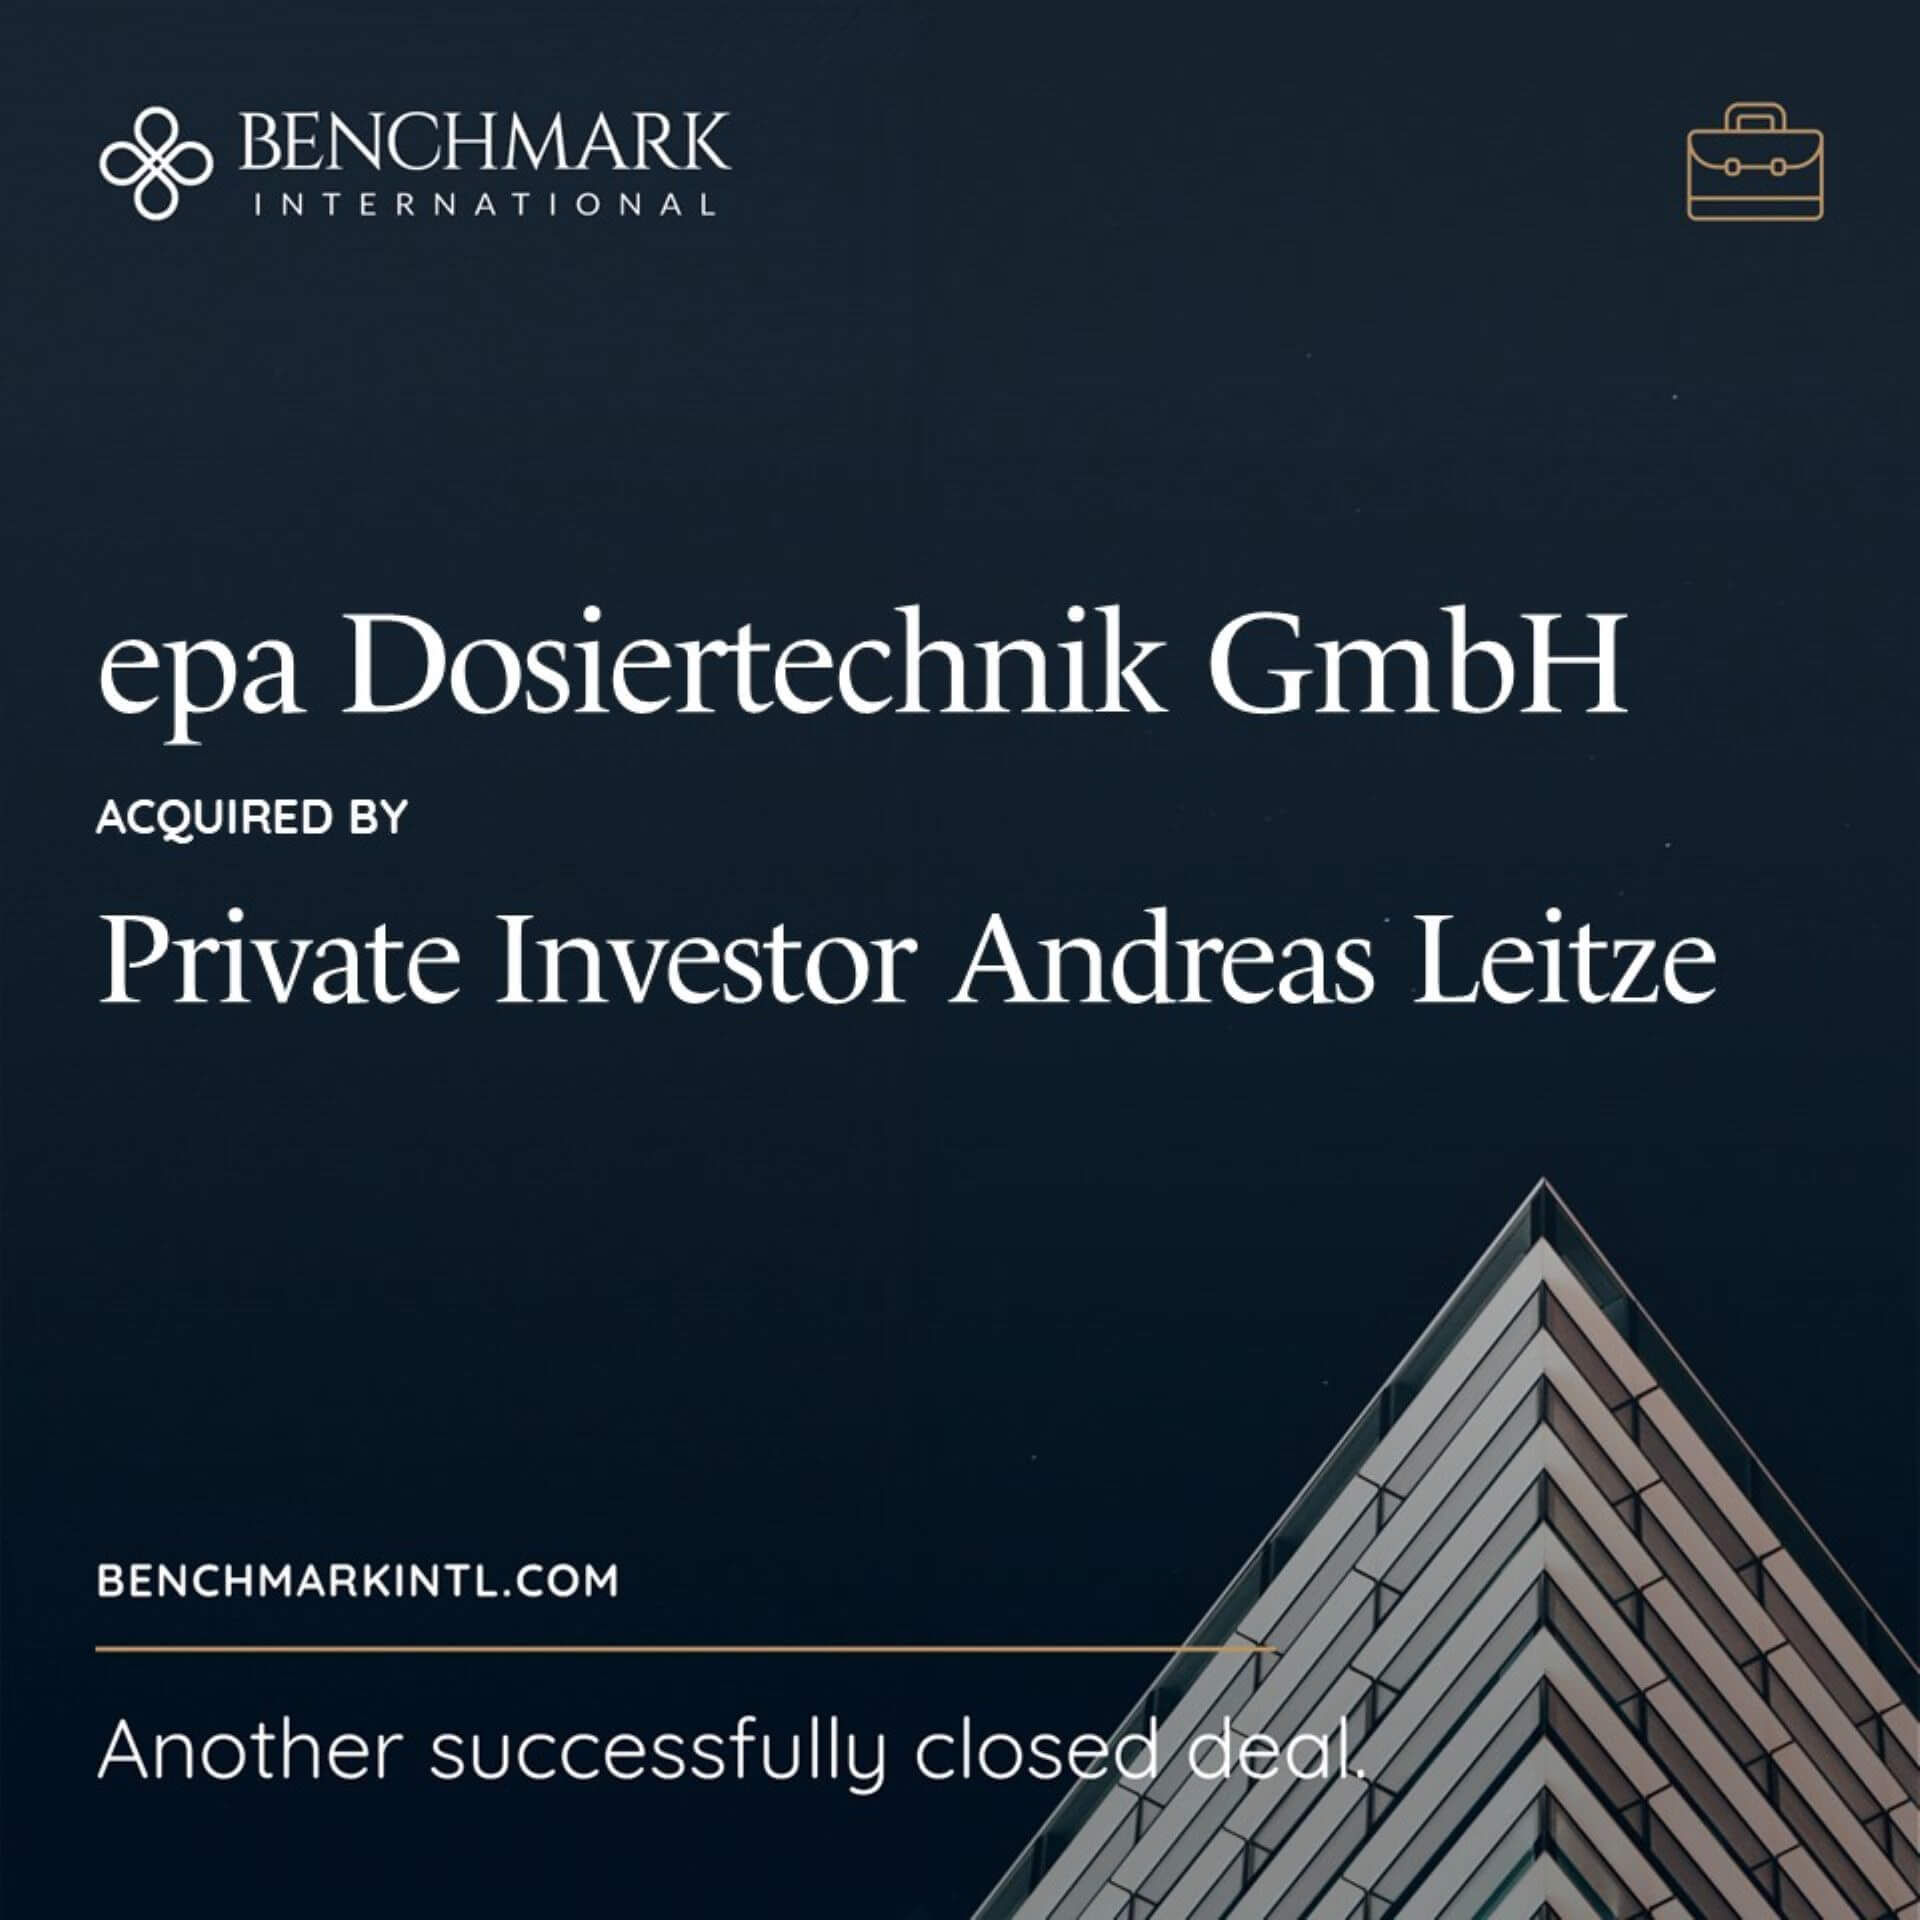  epa Dosiertechnik acquired by private investor